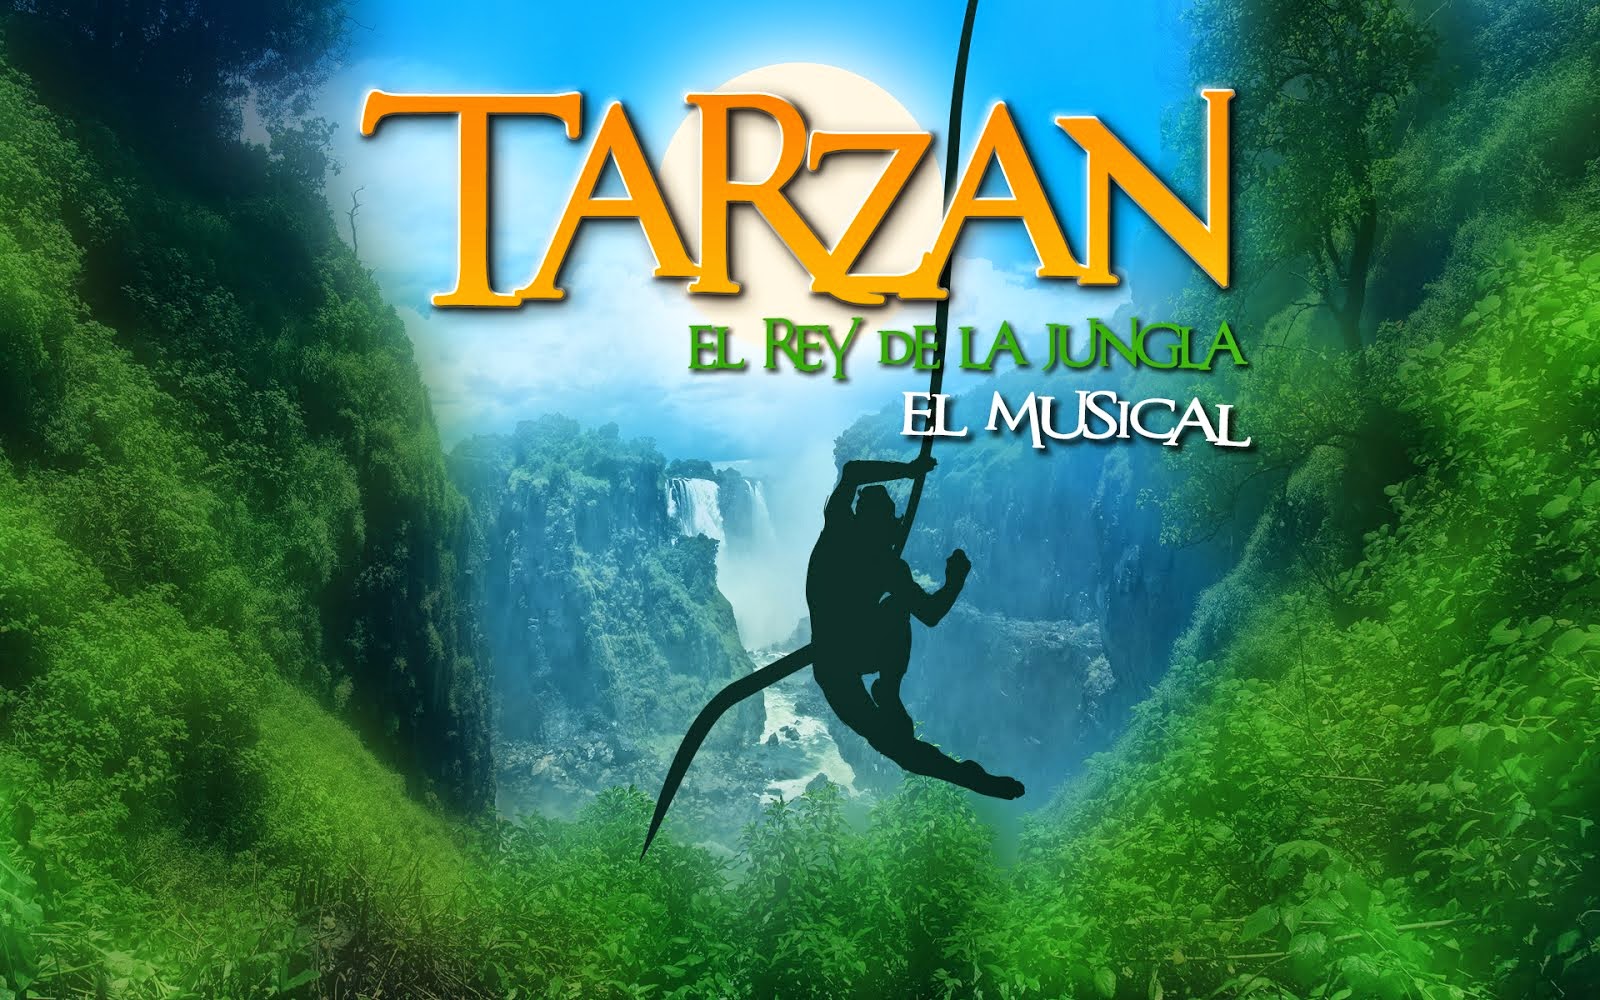 TARZÁN, el rey de la selva, el musical